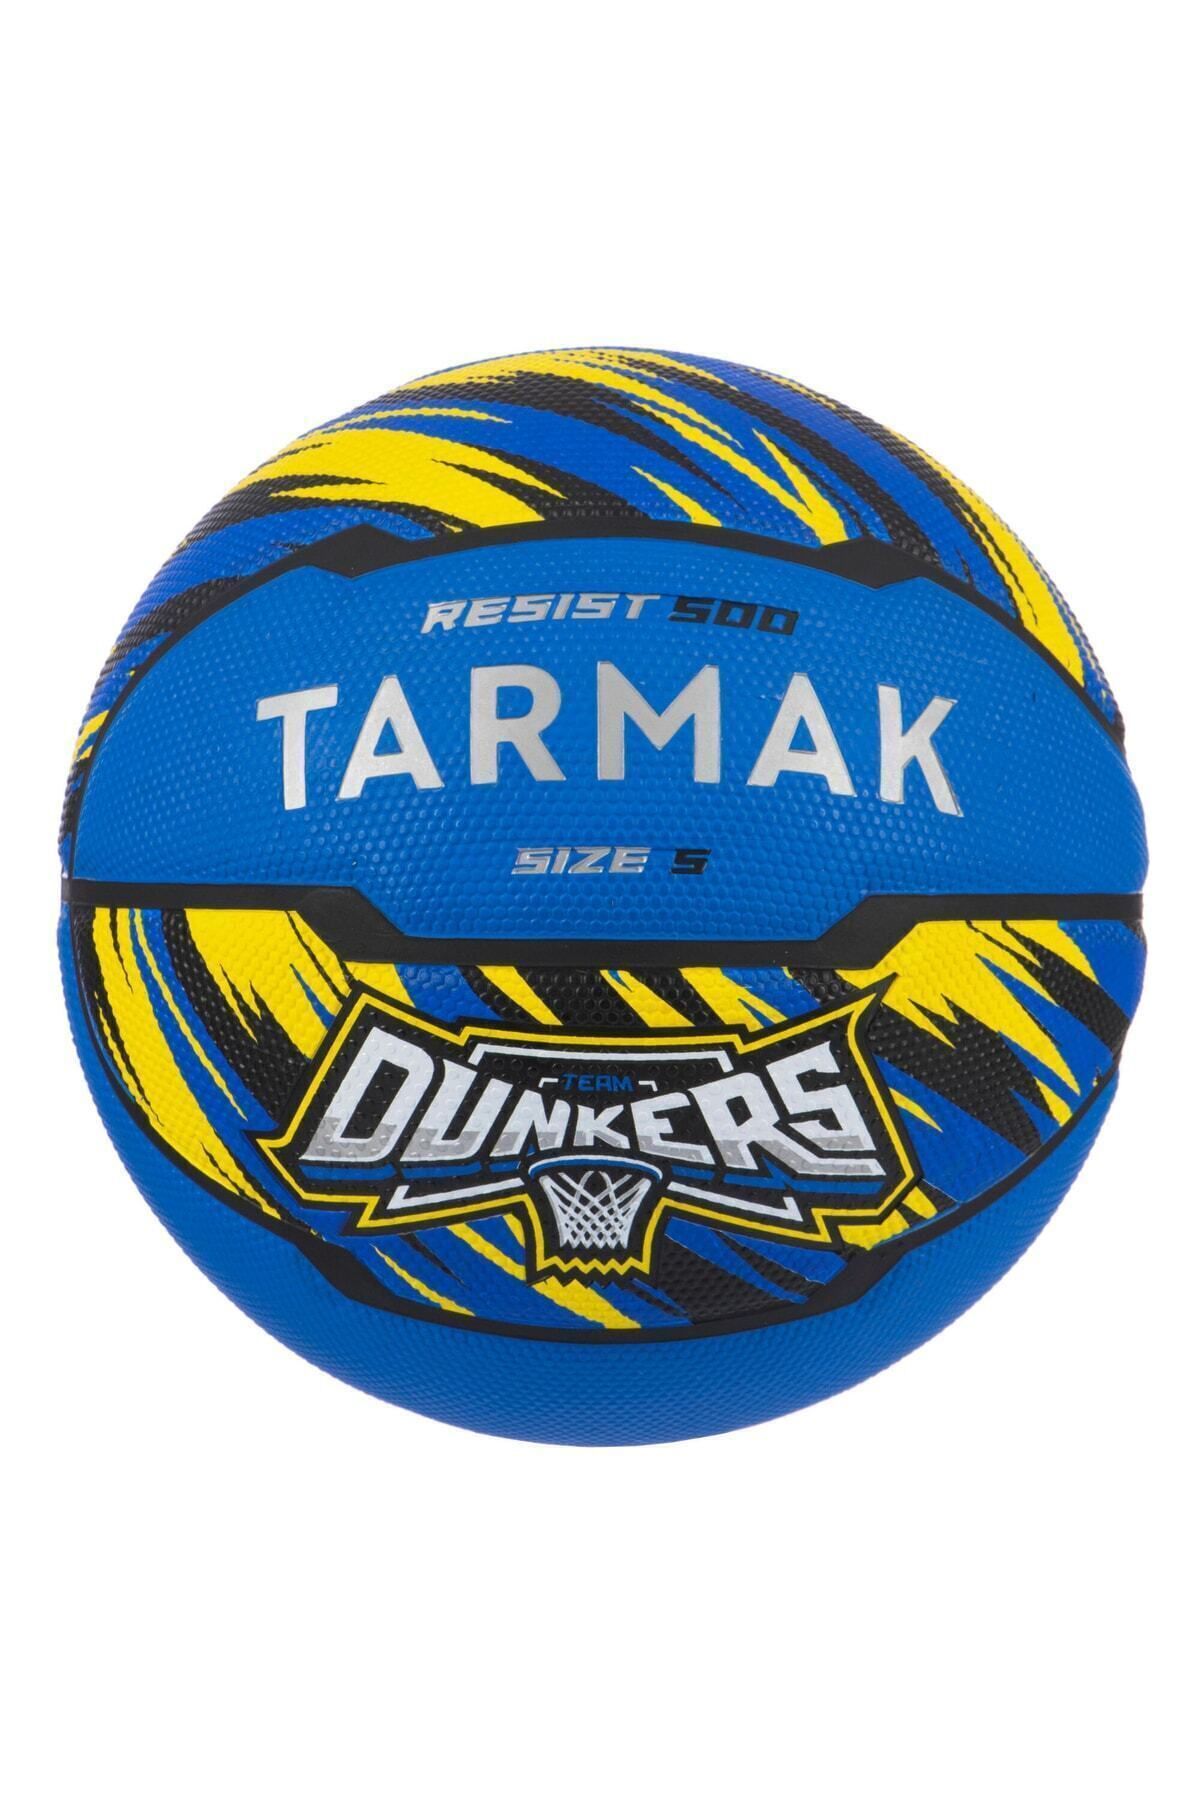 Decathlon Tarmak Basketbol Topu - 5 Numara - Mavi - R500